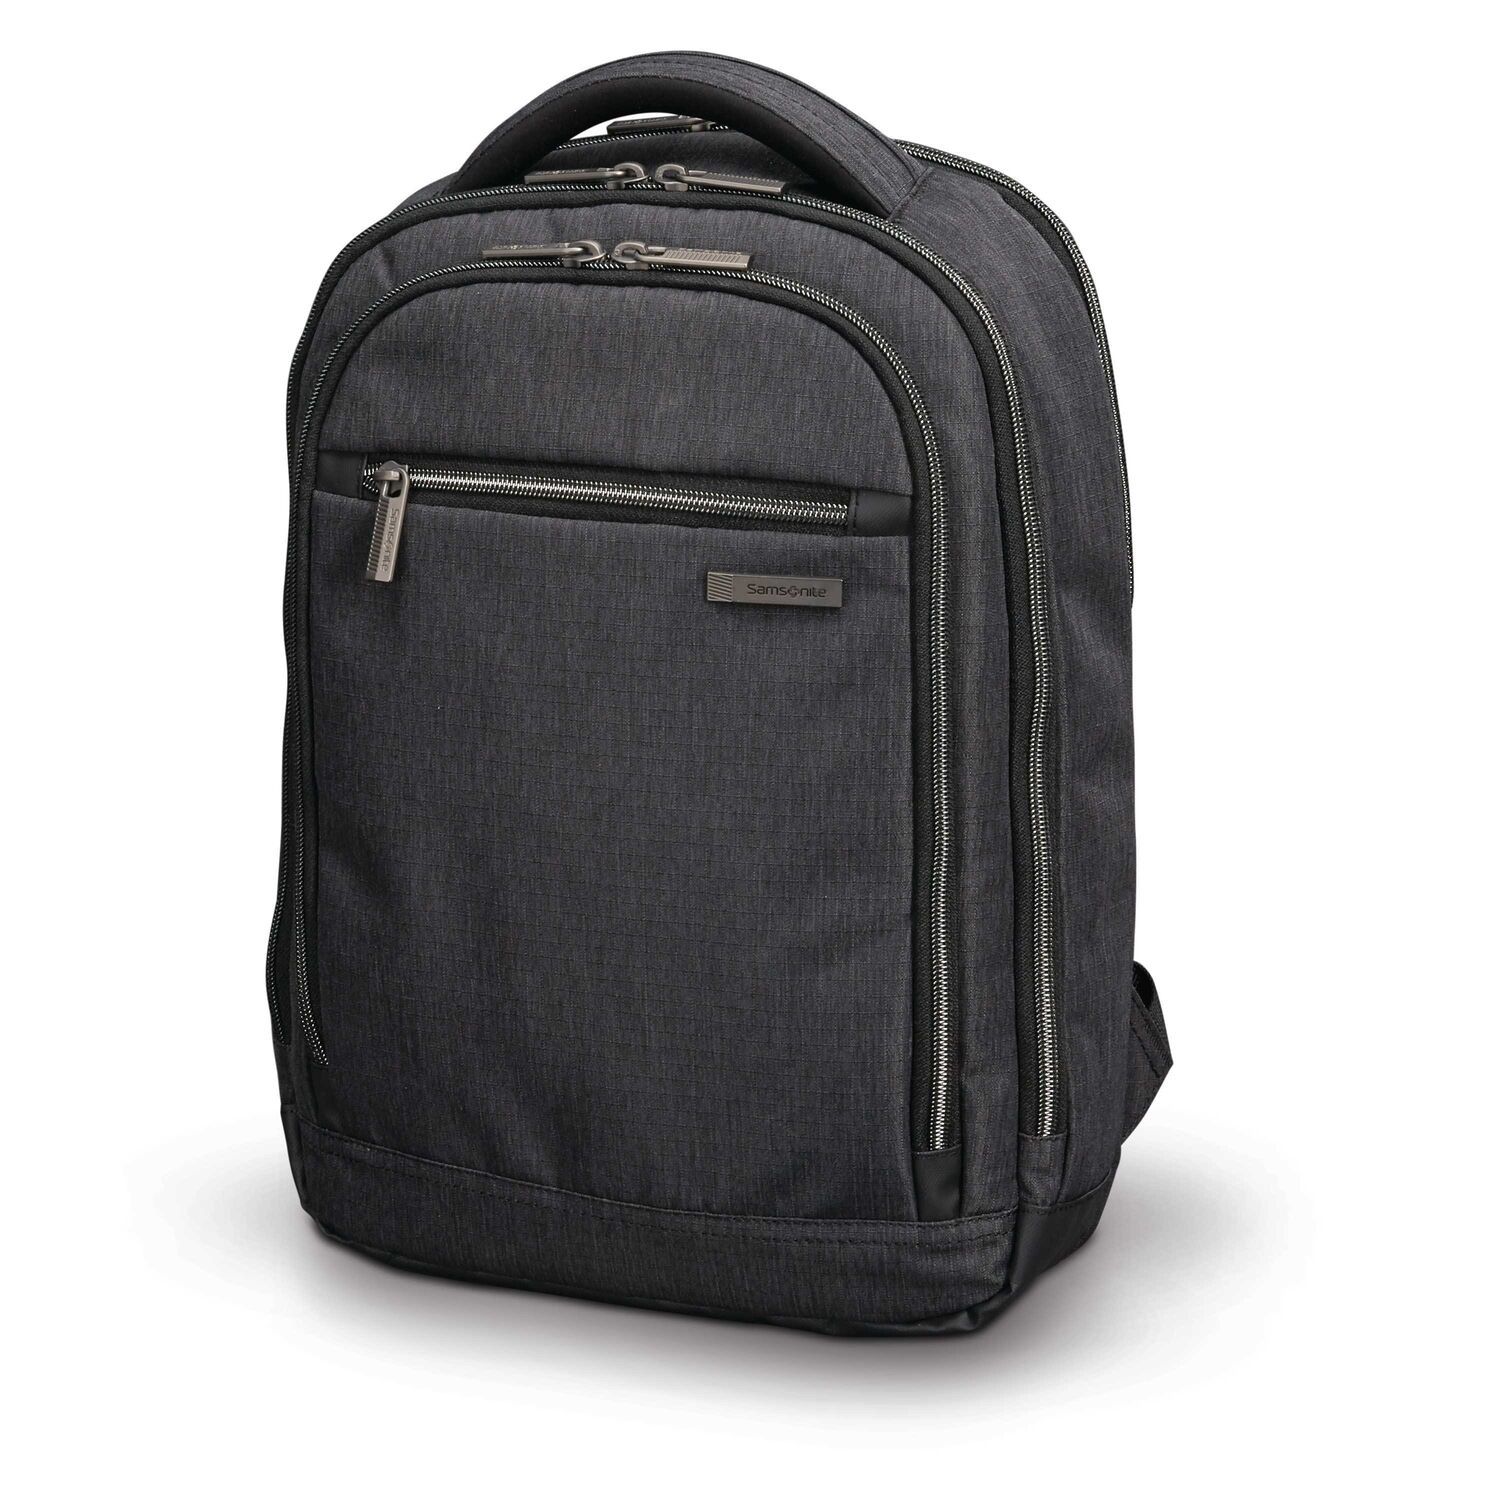 New Samsonite small backpack